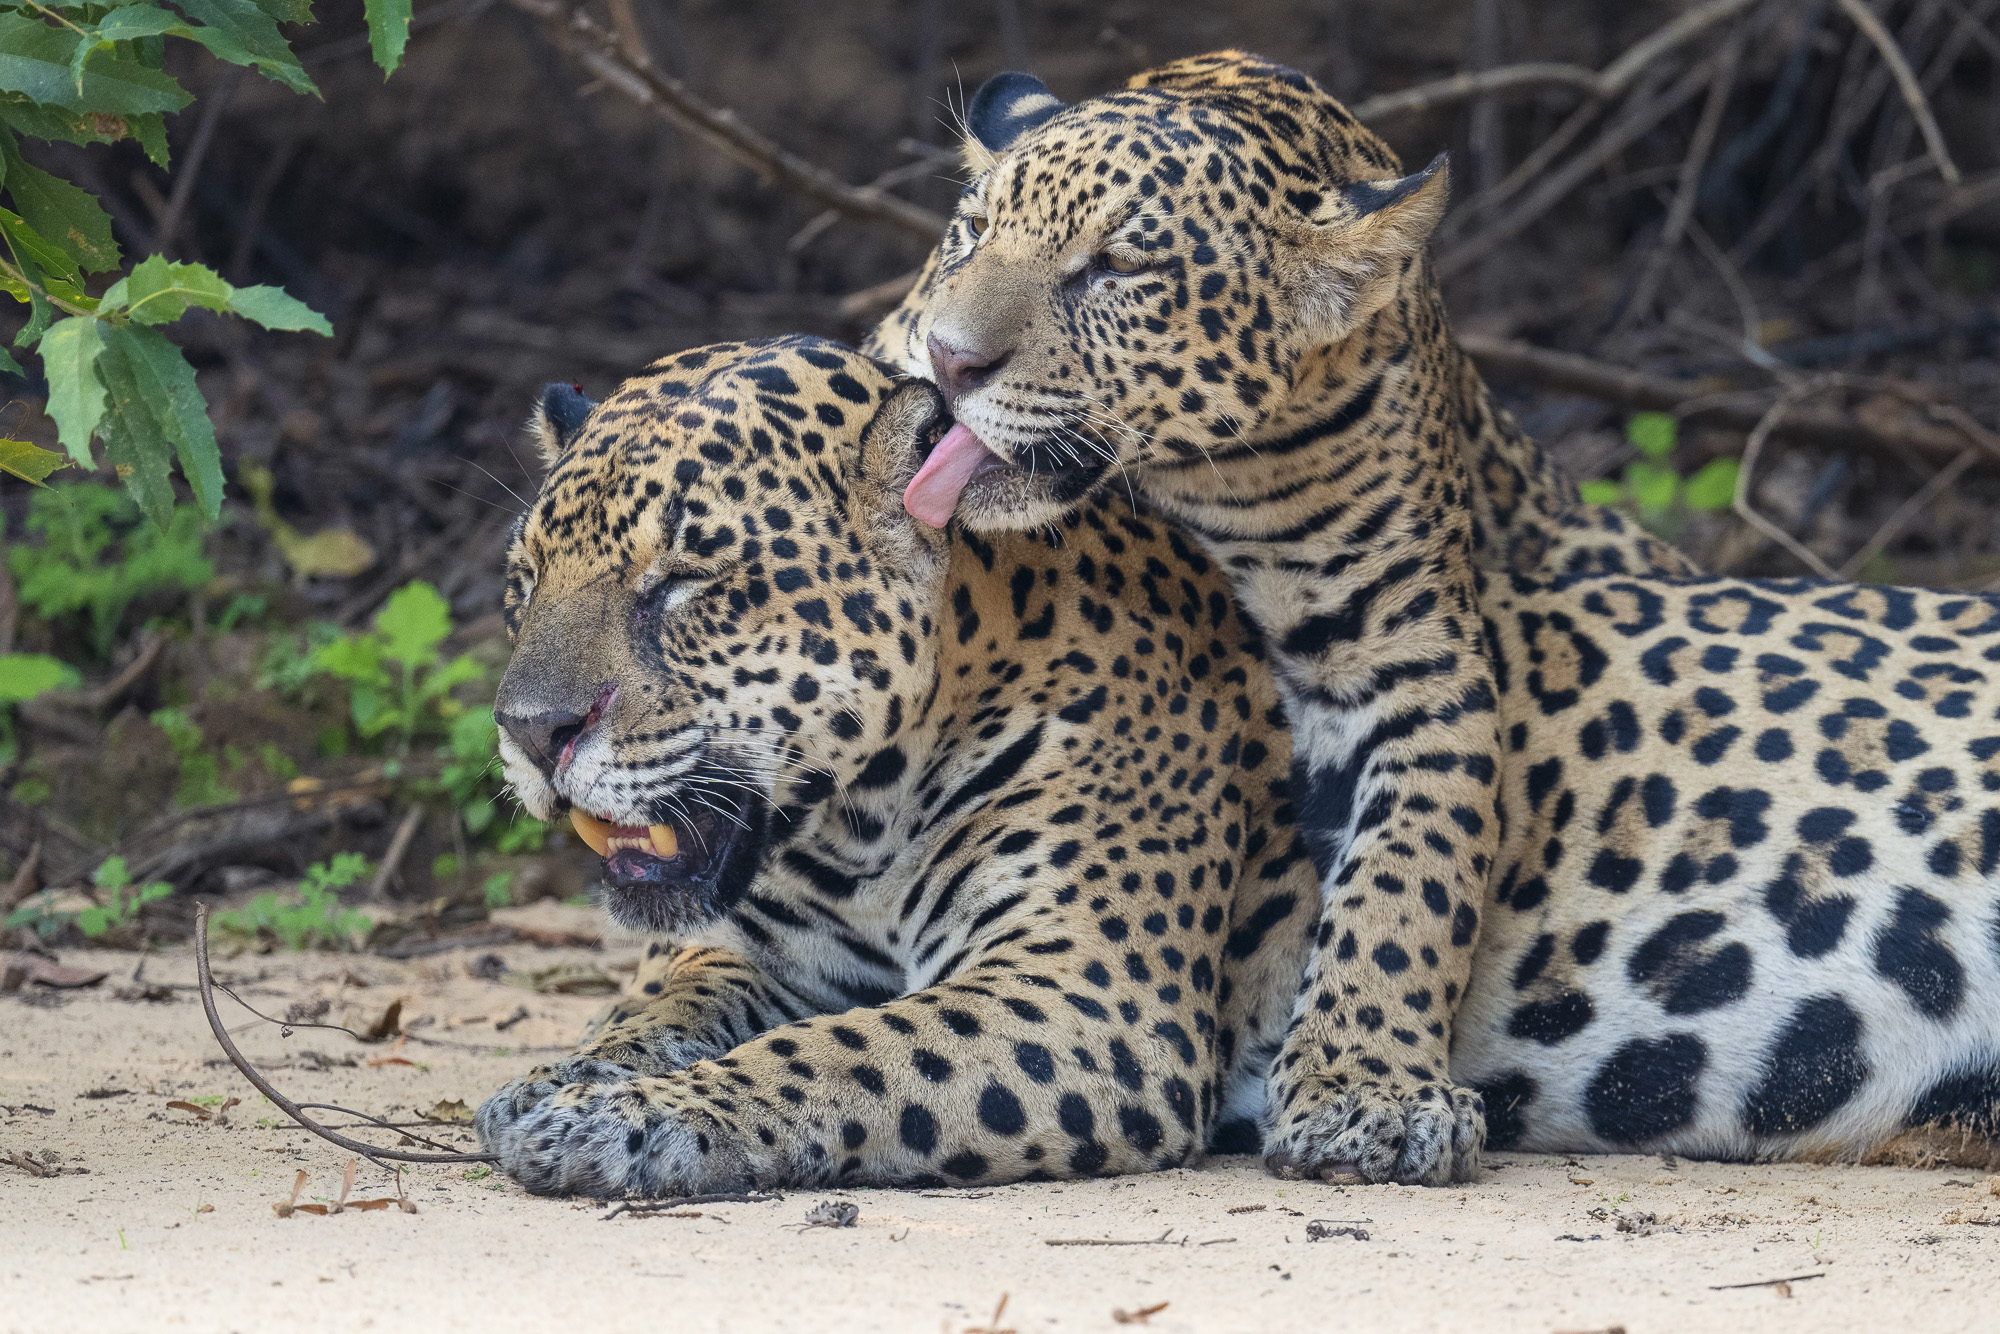 Pantanal, Brasilien - jaguarer, jätteuttrar och aror. Fotoresa med Wild Nature fotoresor. Foto: Staffan Widstrand